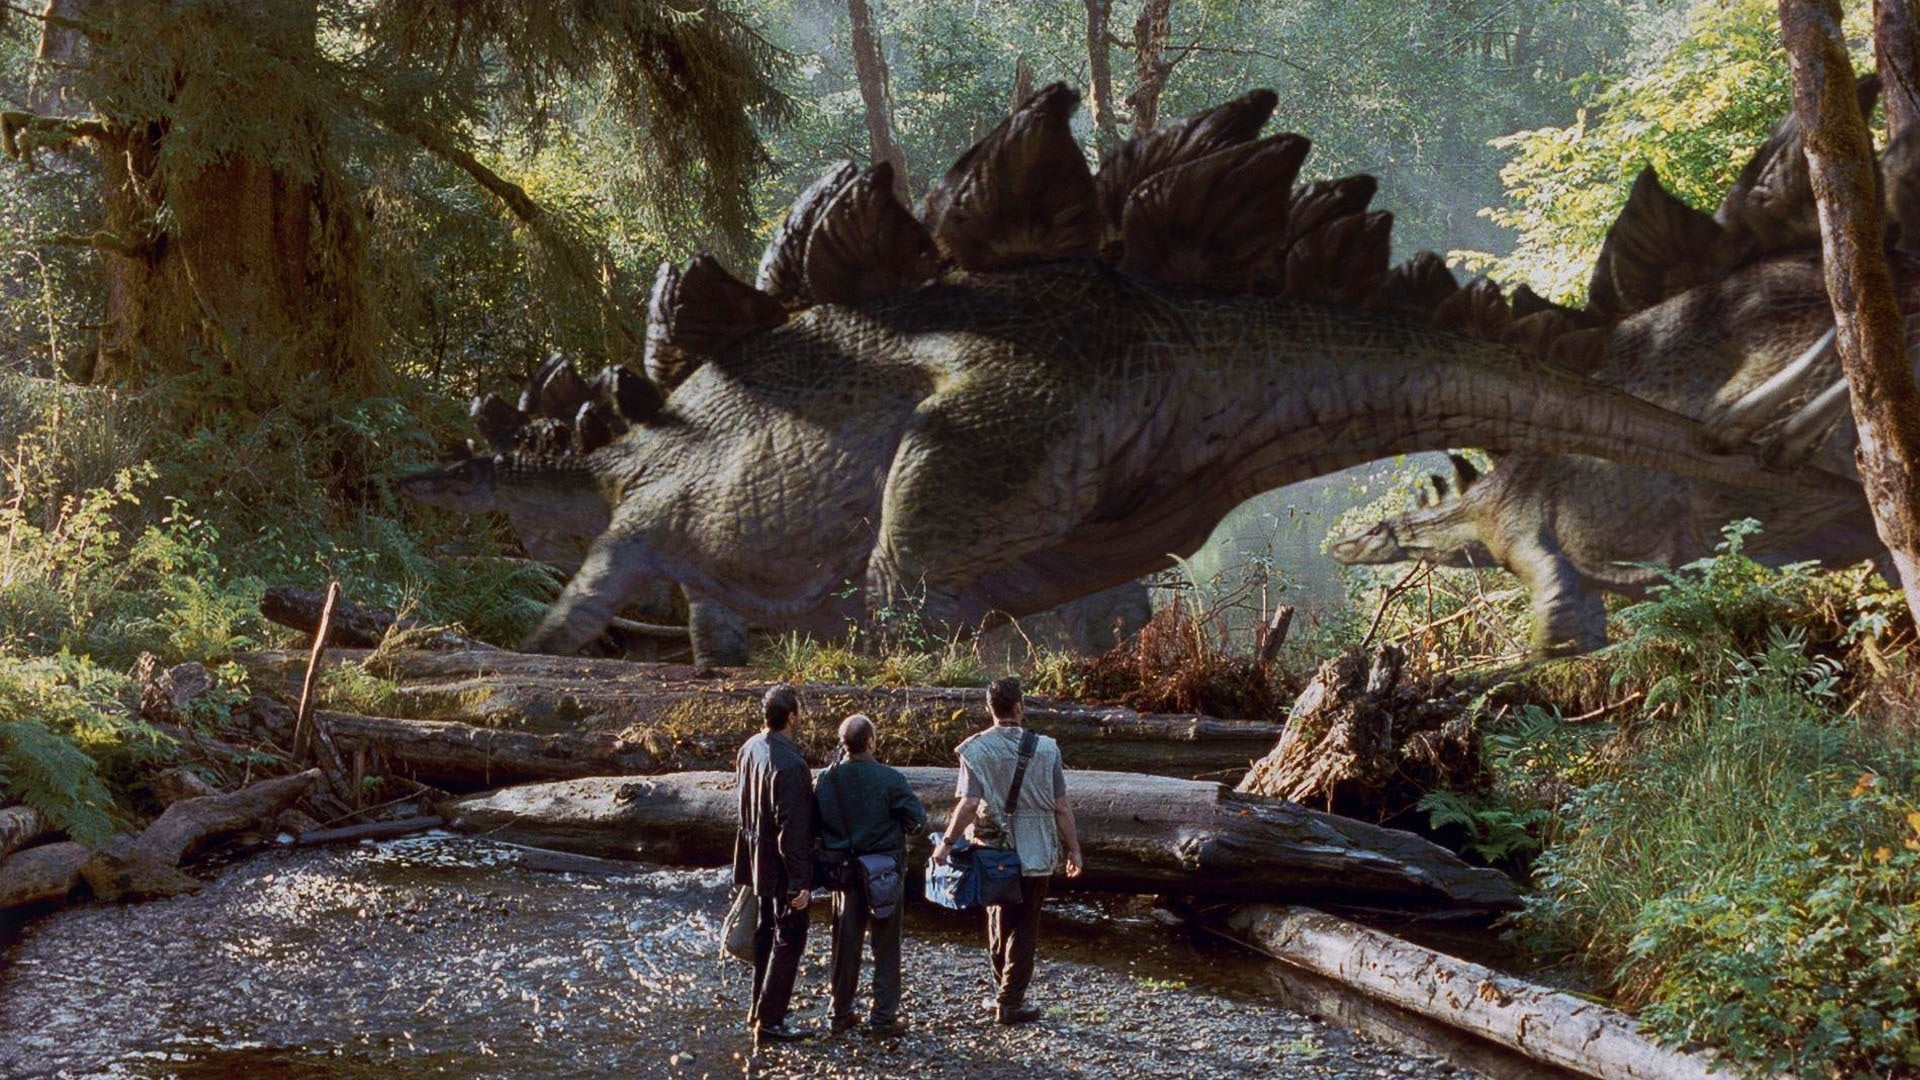 Image du film Le Monde perdu : Jurassic Park 2w1mfdpe3bh1hlaifaubwe4nbcpjpg